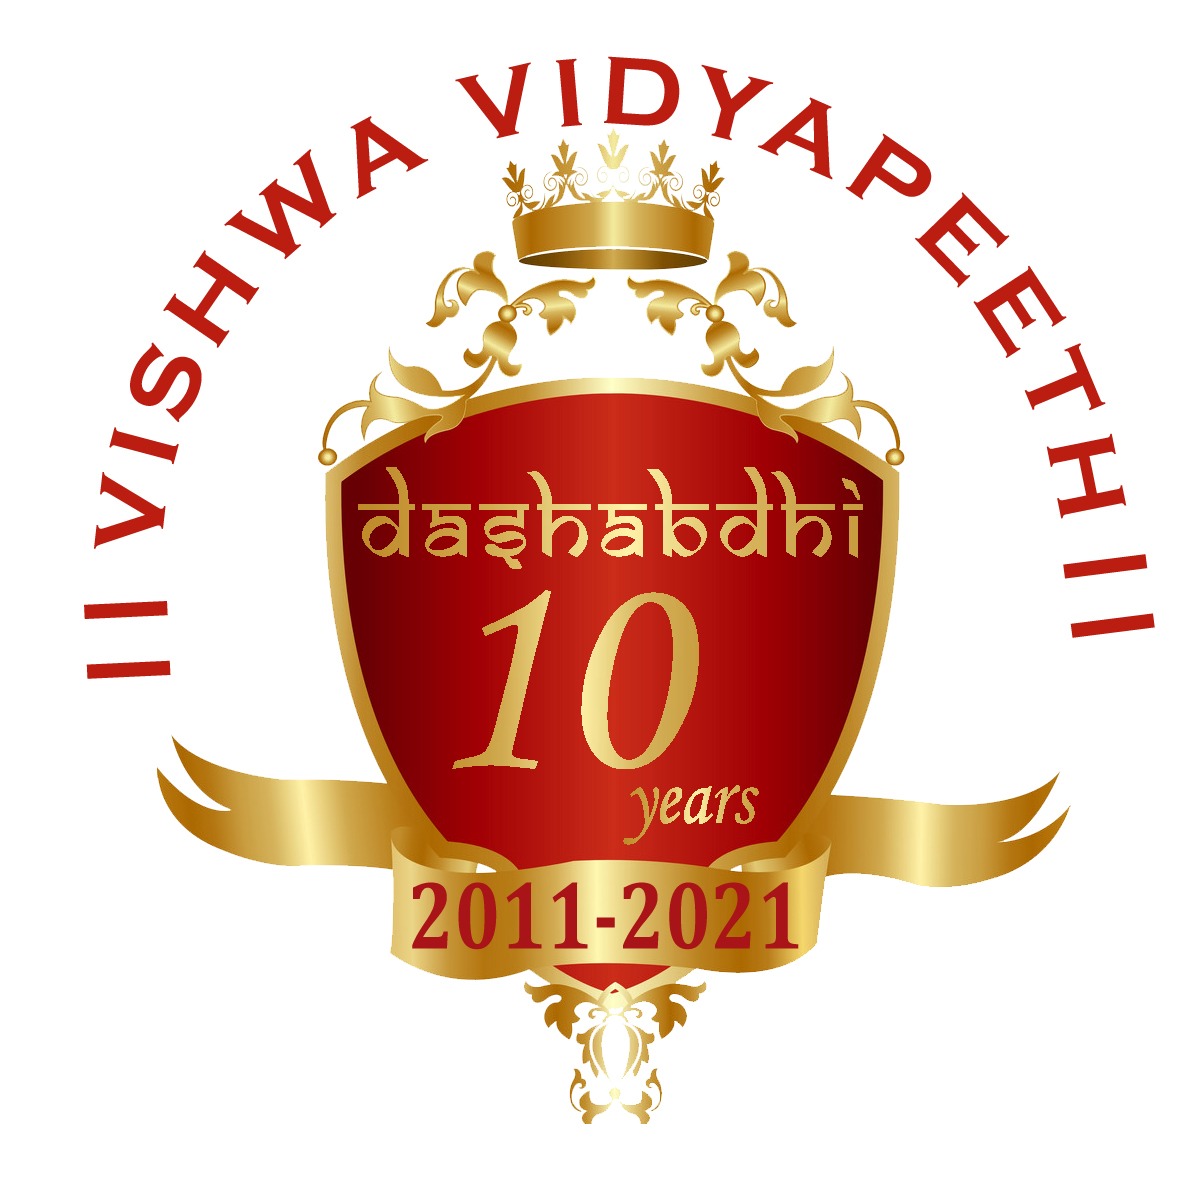 Dashabdhi-VVP-logo